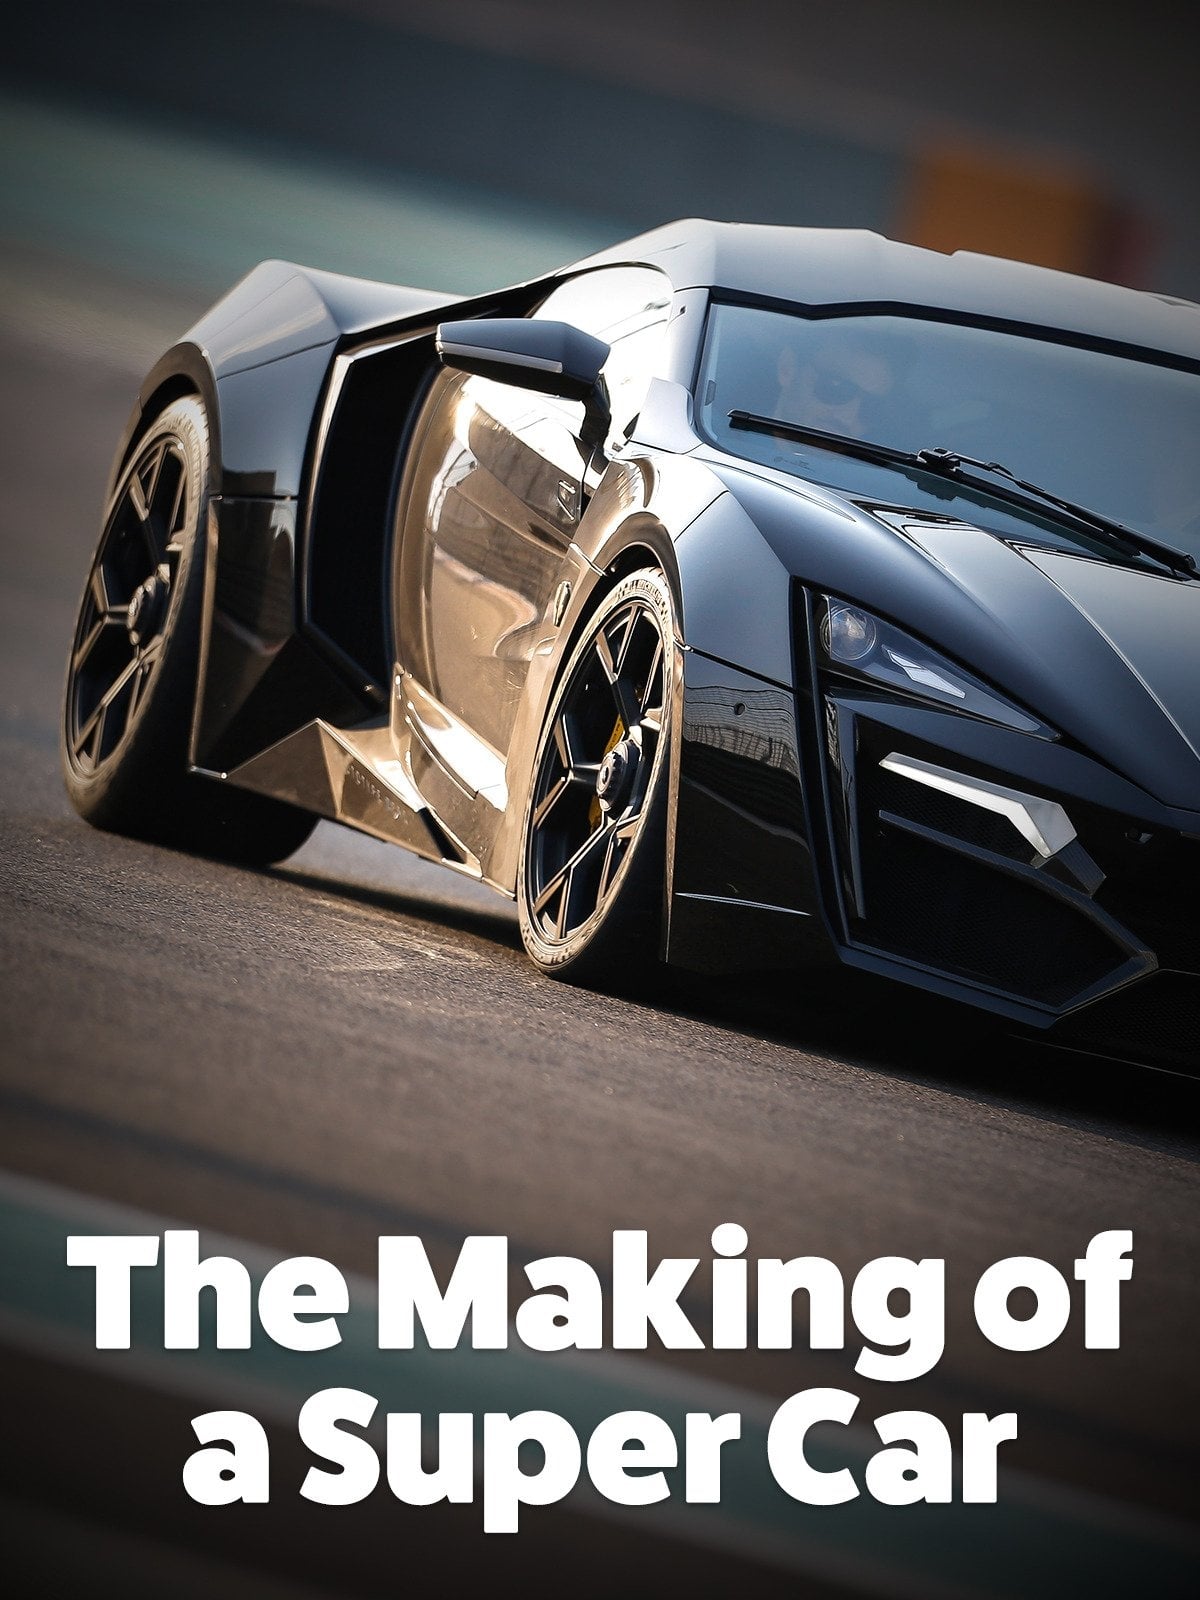 The Making of a Super Car